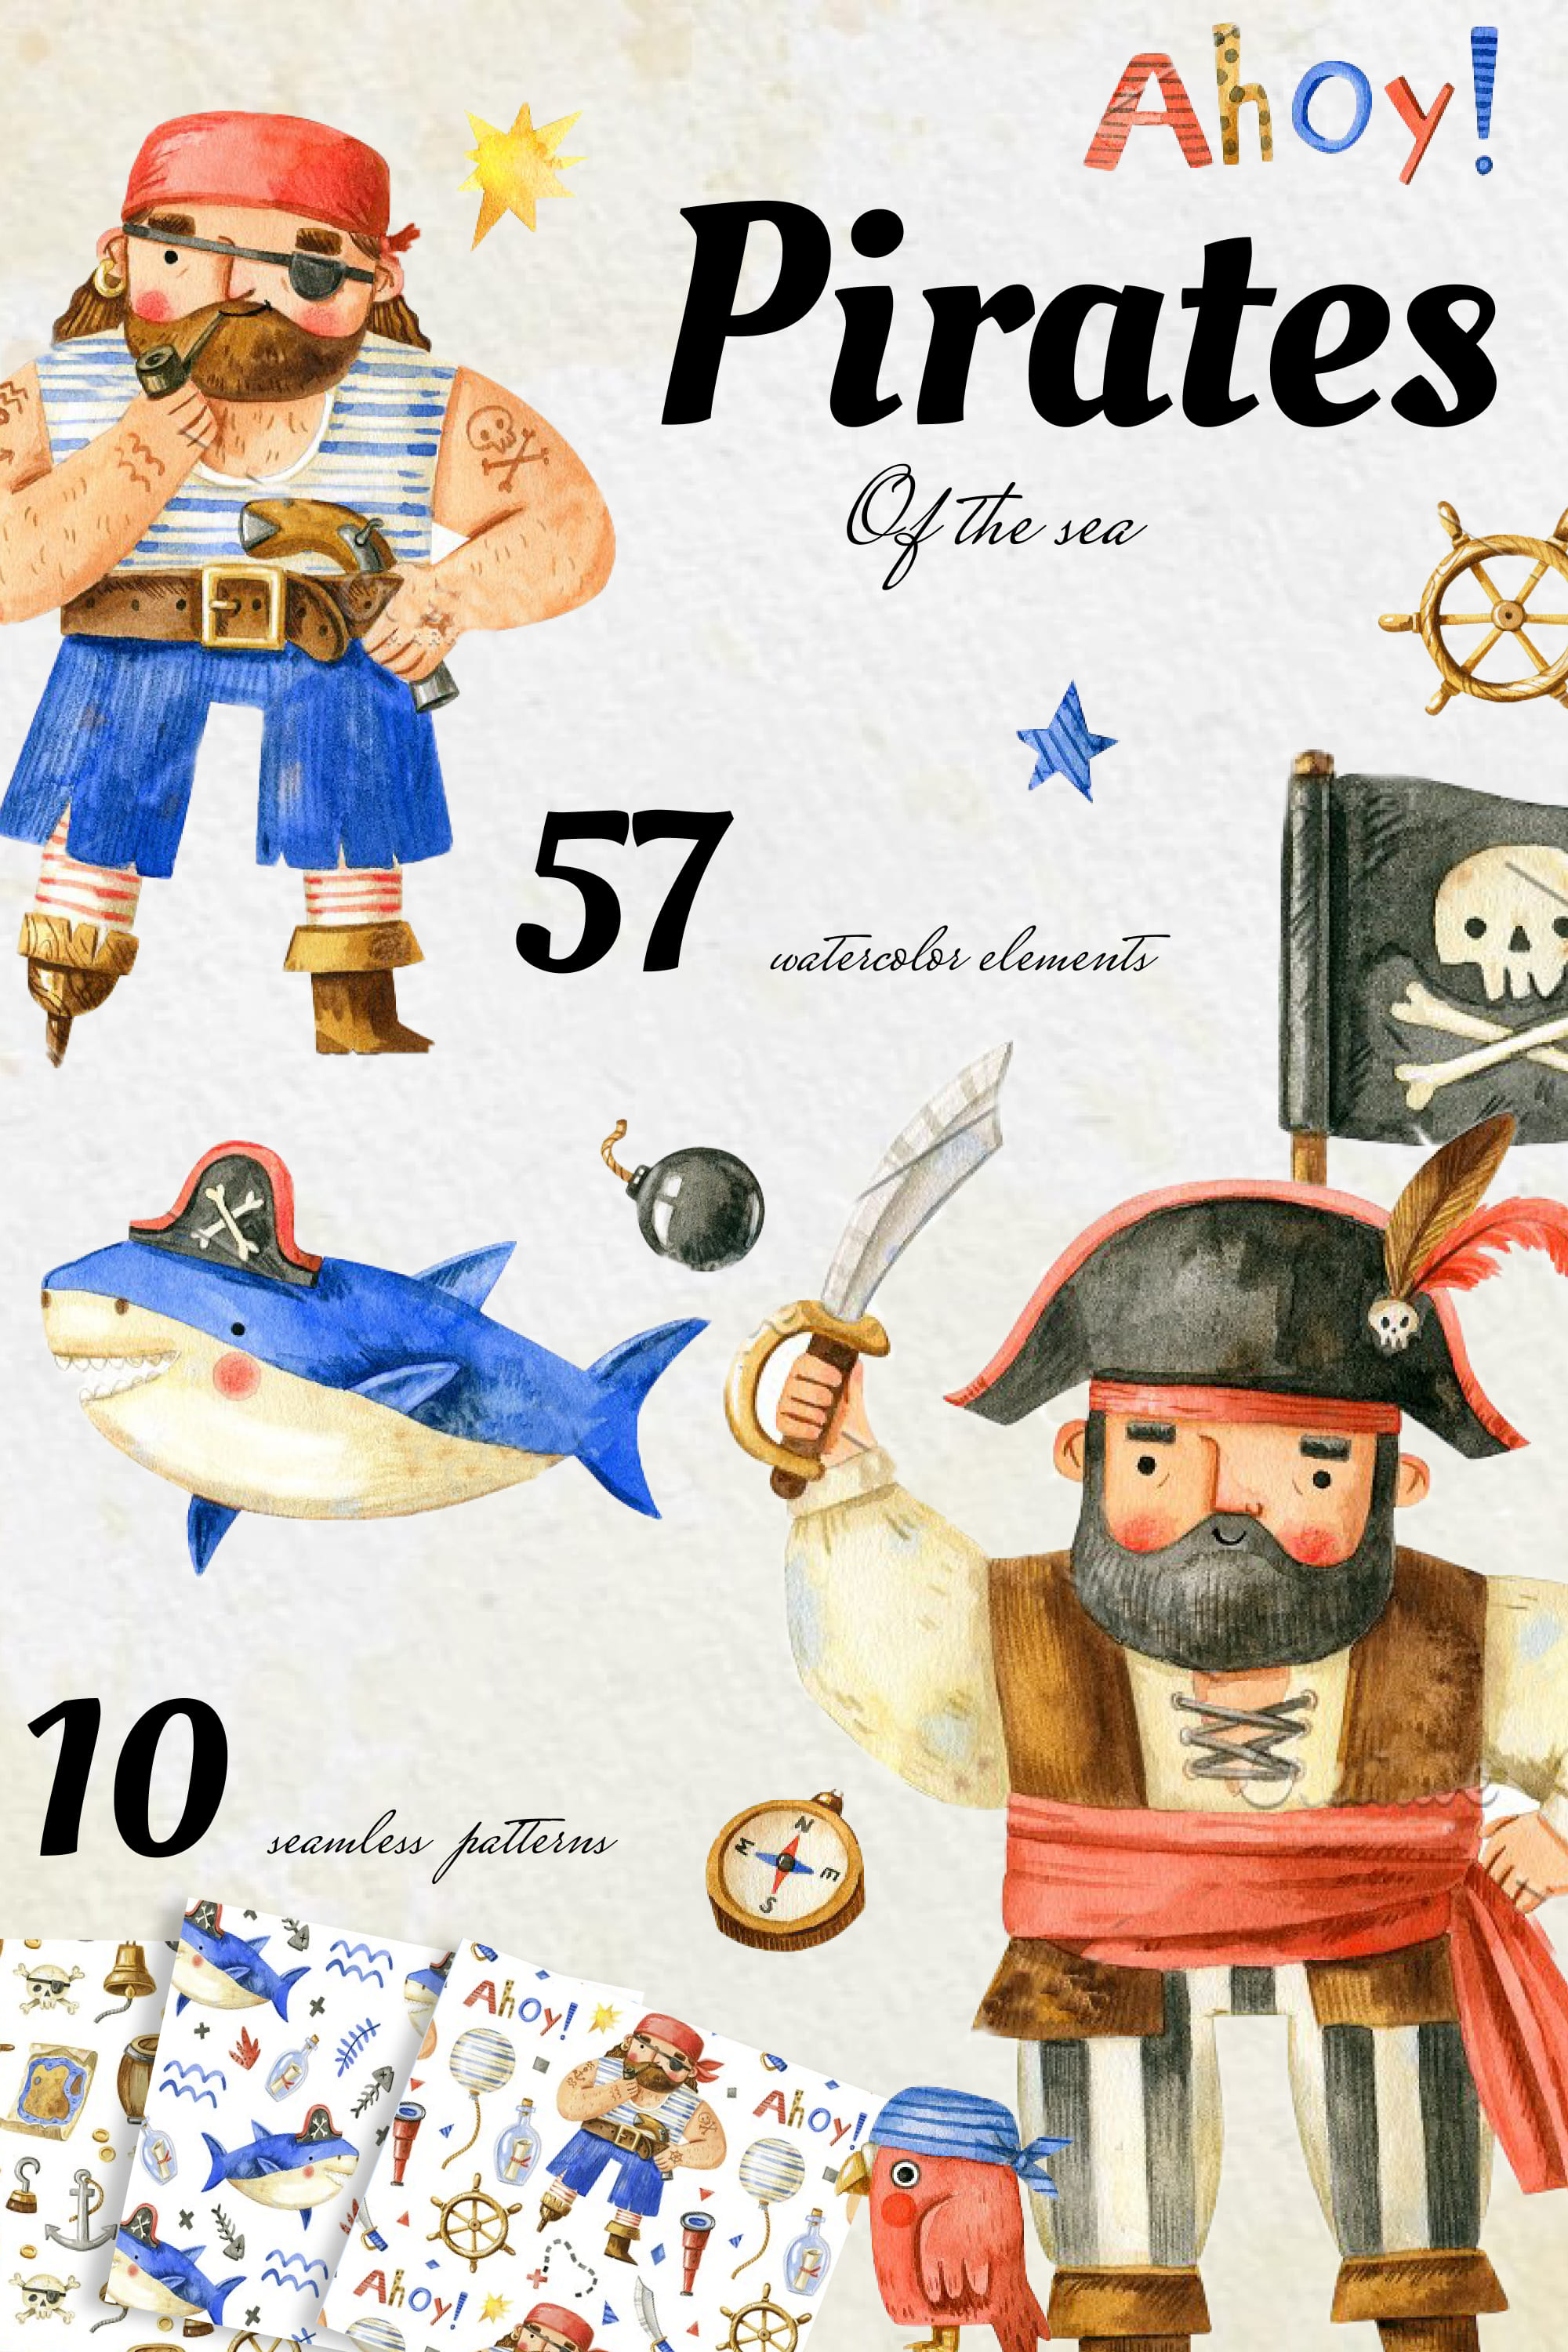 pirates of the sea pinterest